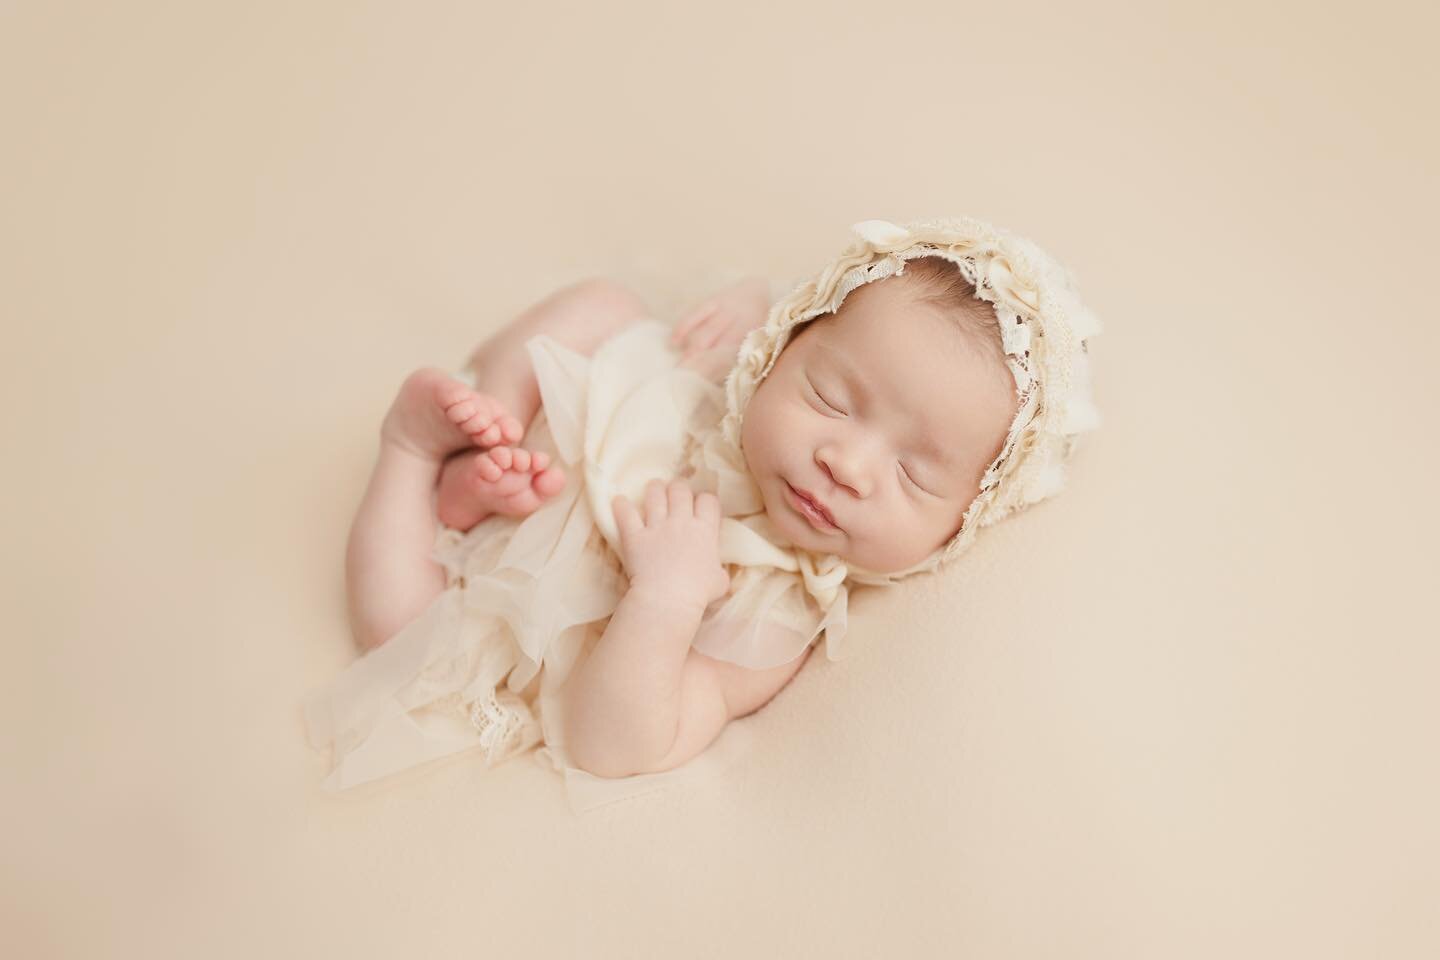 Sweet Baby Eva 😍

#newbornphotography #dallasnewbornphotographer #newborn #baby #newbornposing #newbornprops #newbornphotography #dfwnewborn #dfwnewbornphotographer #newbornposes #newbornportraits #